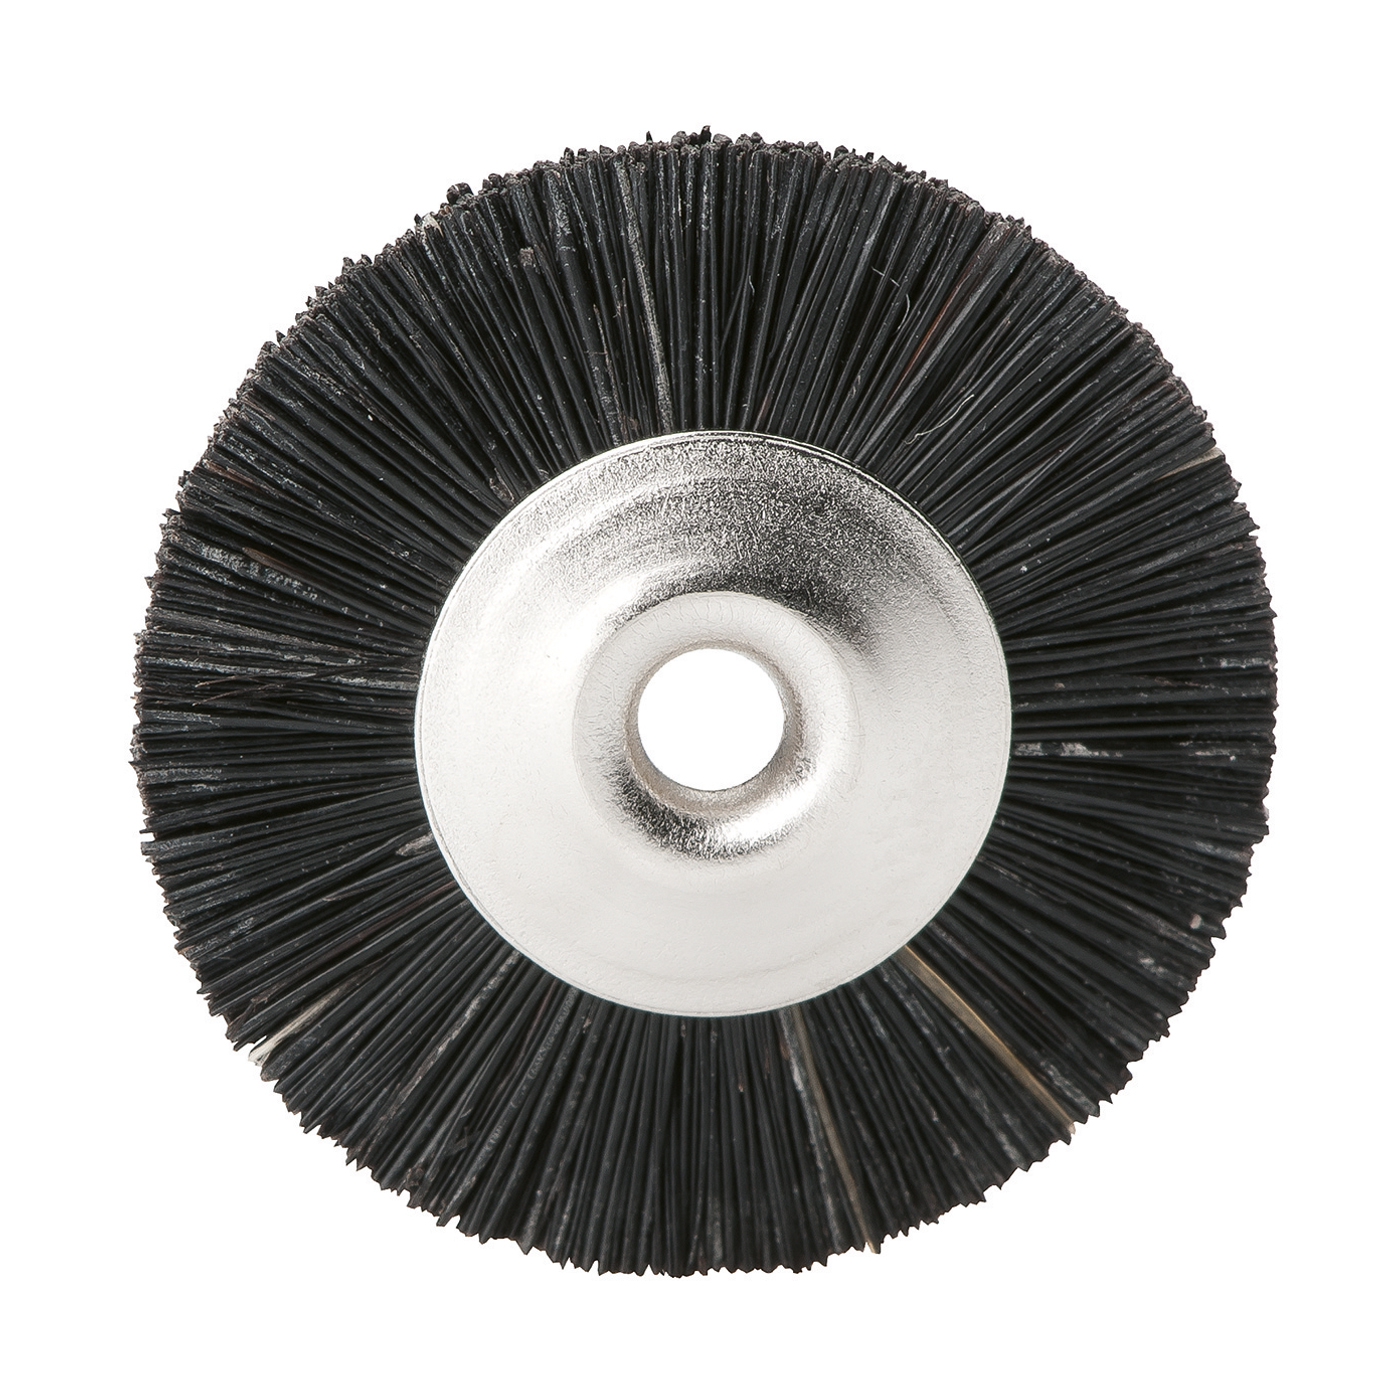 Mini Brushes, Wheels, Chungking, Black, ø 19 mm - 12 pieces